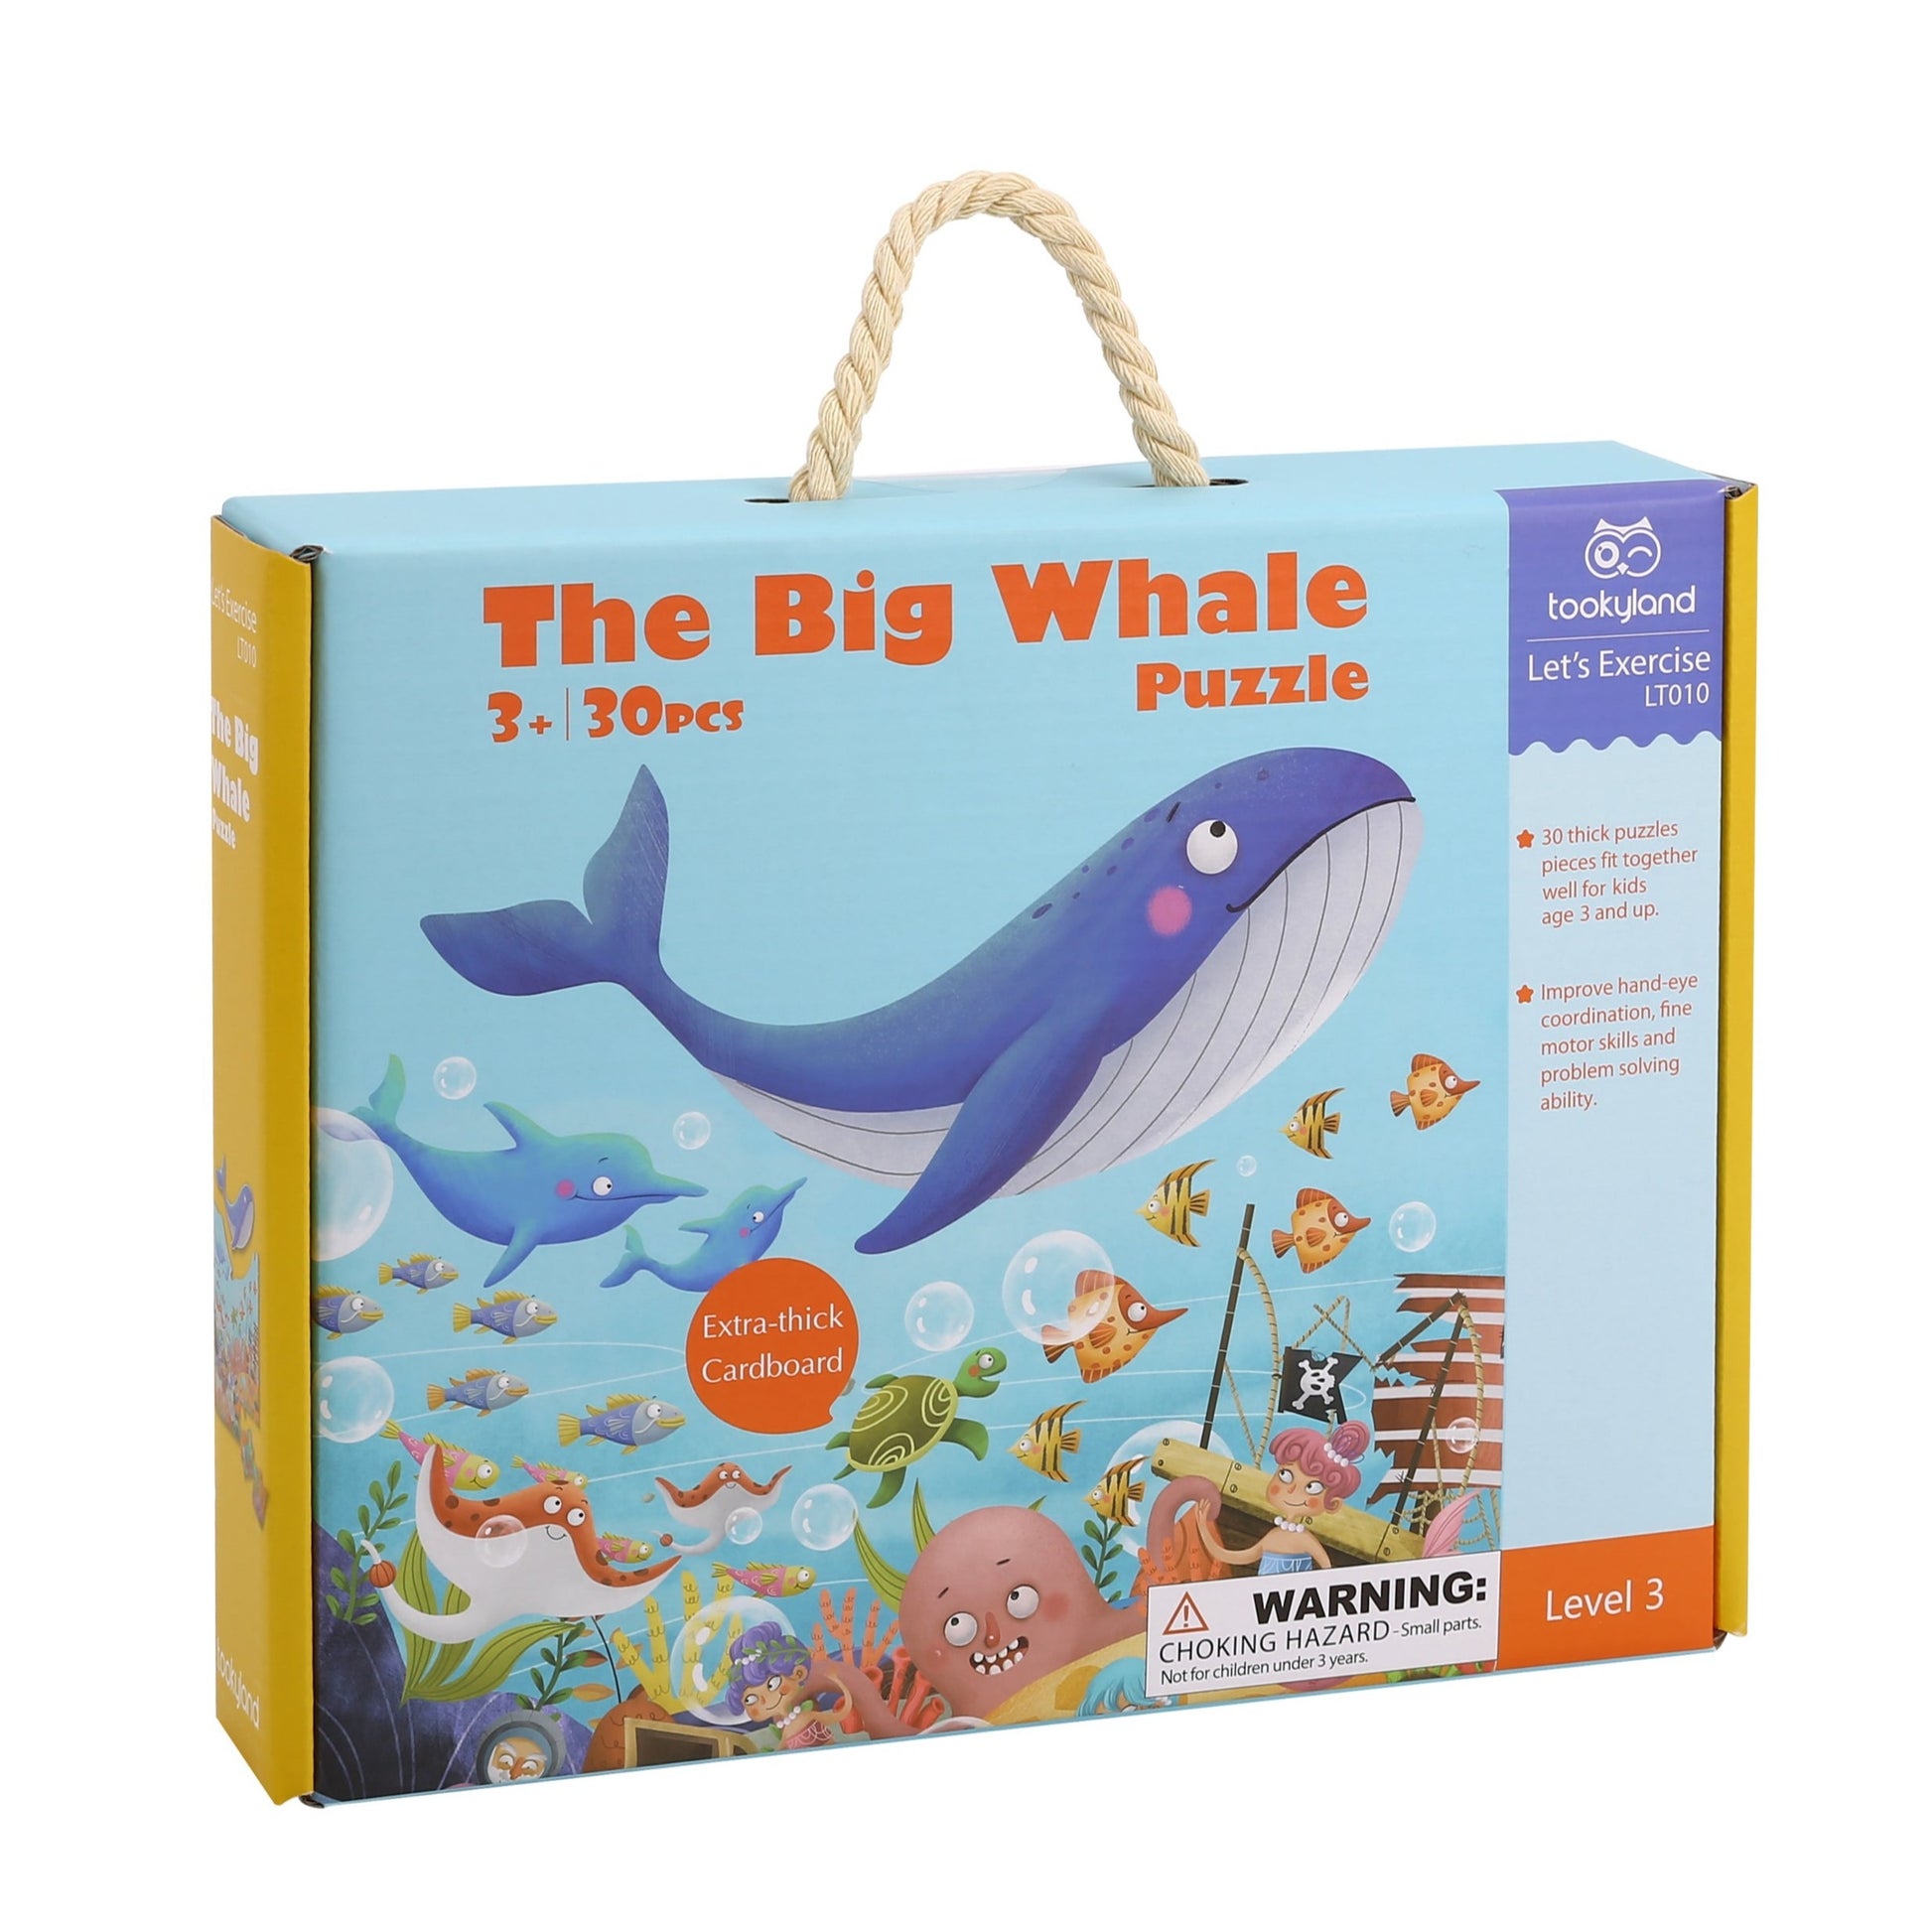 Tookyland Puzzle The Big Whale 30pc box